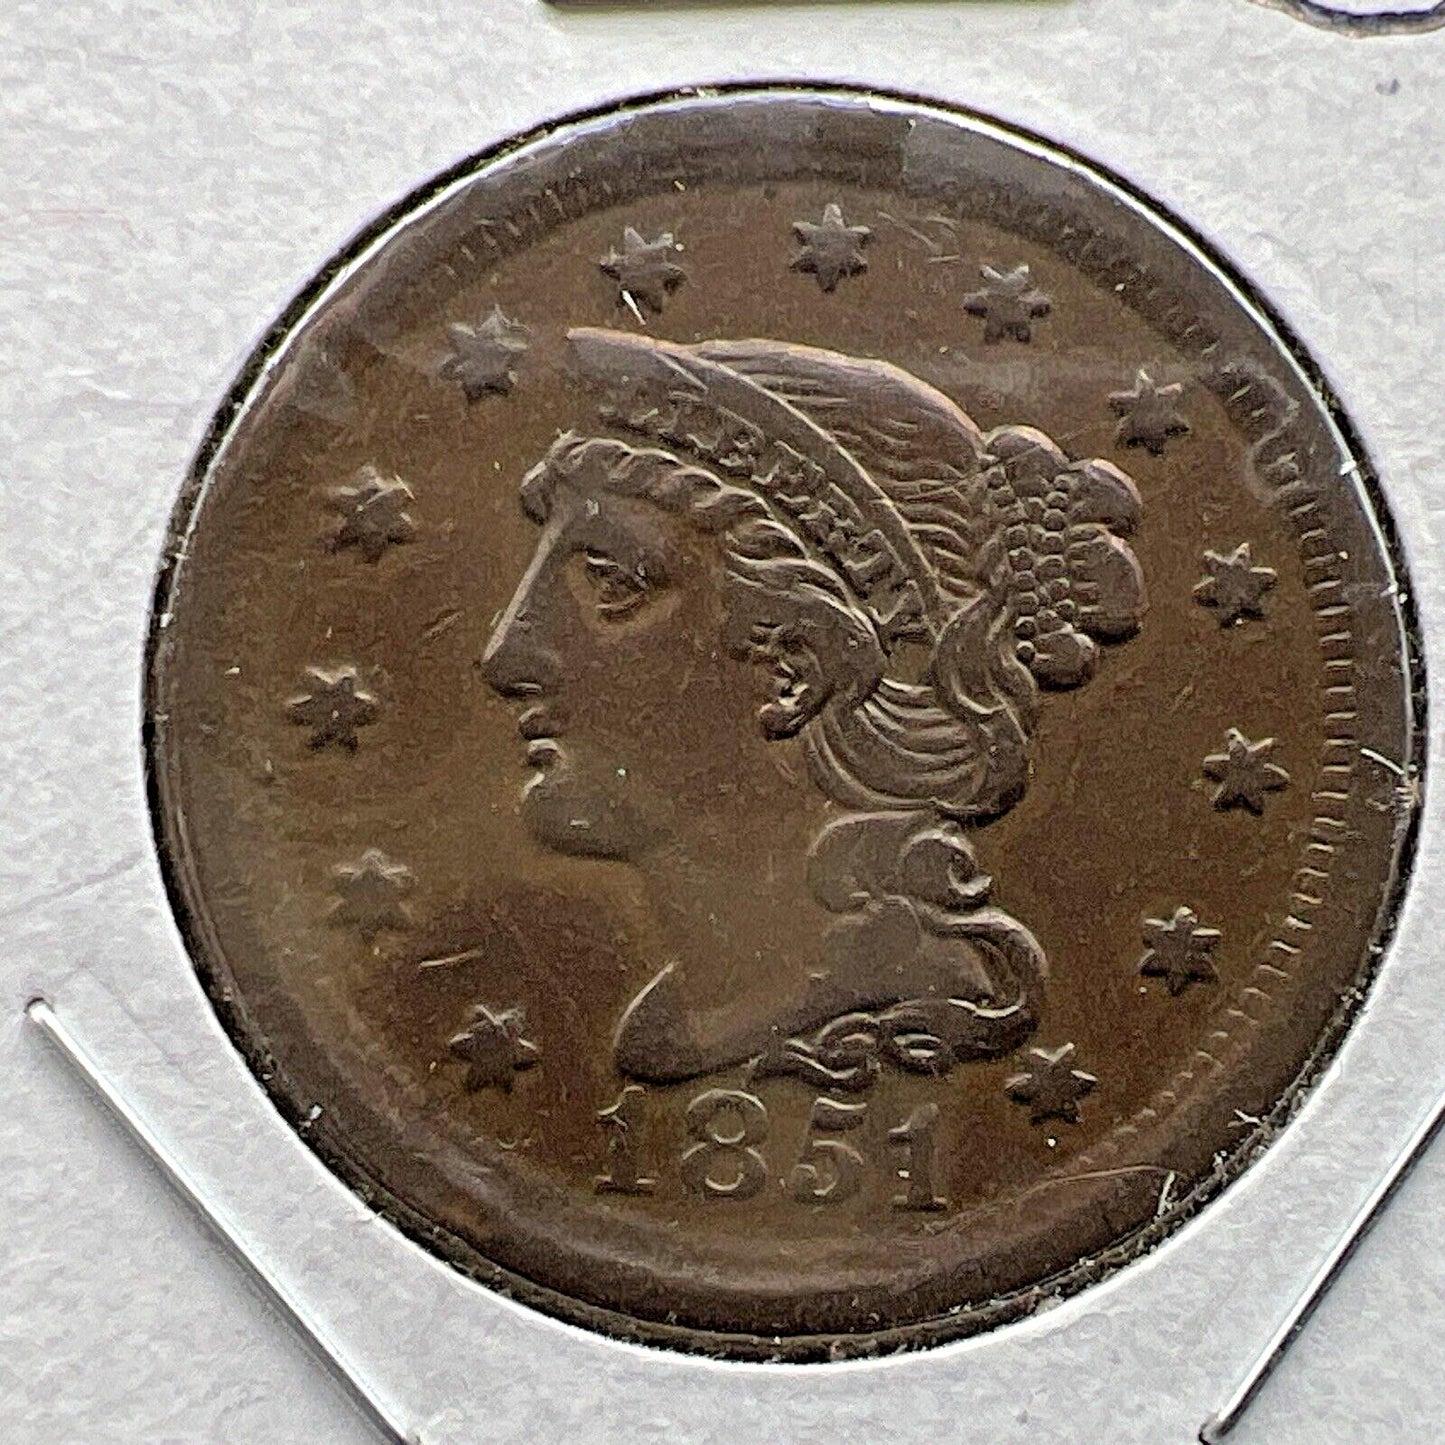 1851 1c Braided Hair Large Cent Coin OBV Struck Thru Grease Error XF EF Details